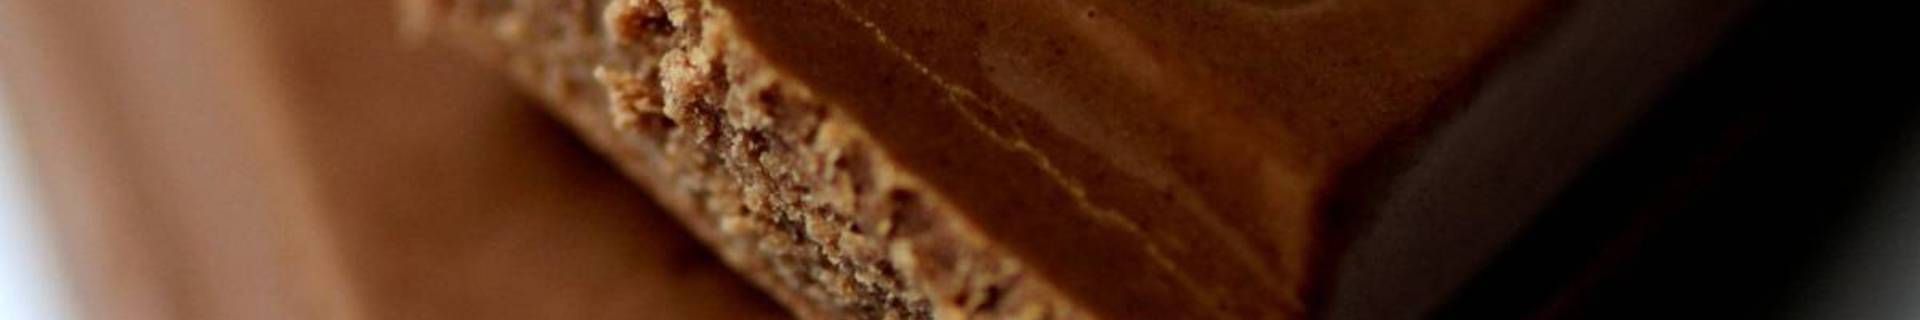 Chocolate ecológico de comercio justo - ECOLECTIA